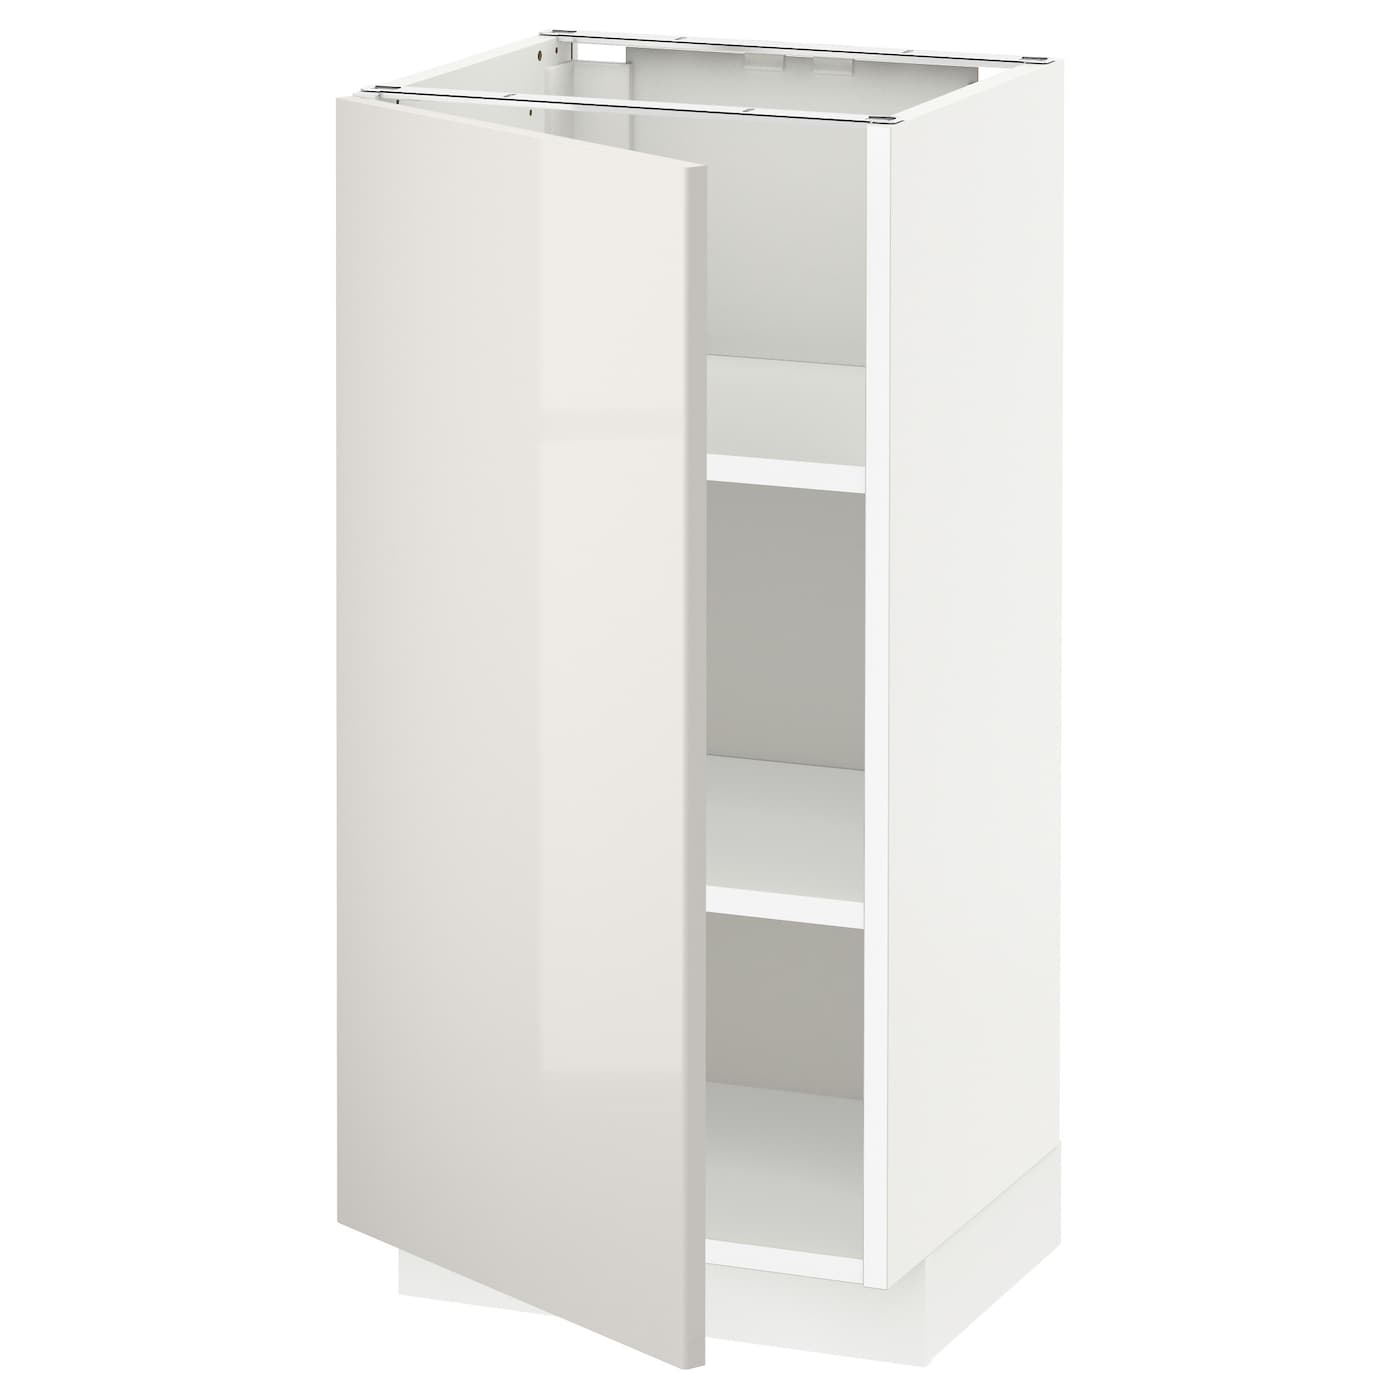 Напольный шкаф - METOD IKEA/ МЕТОД ИКЕА,  88х40 см, белый/светло-серый